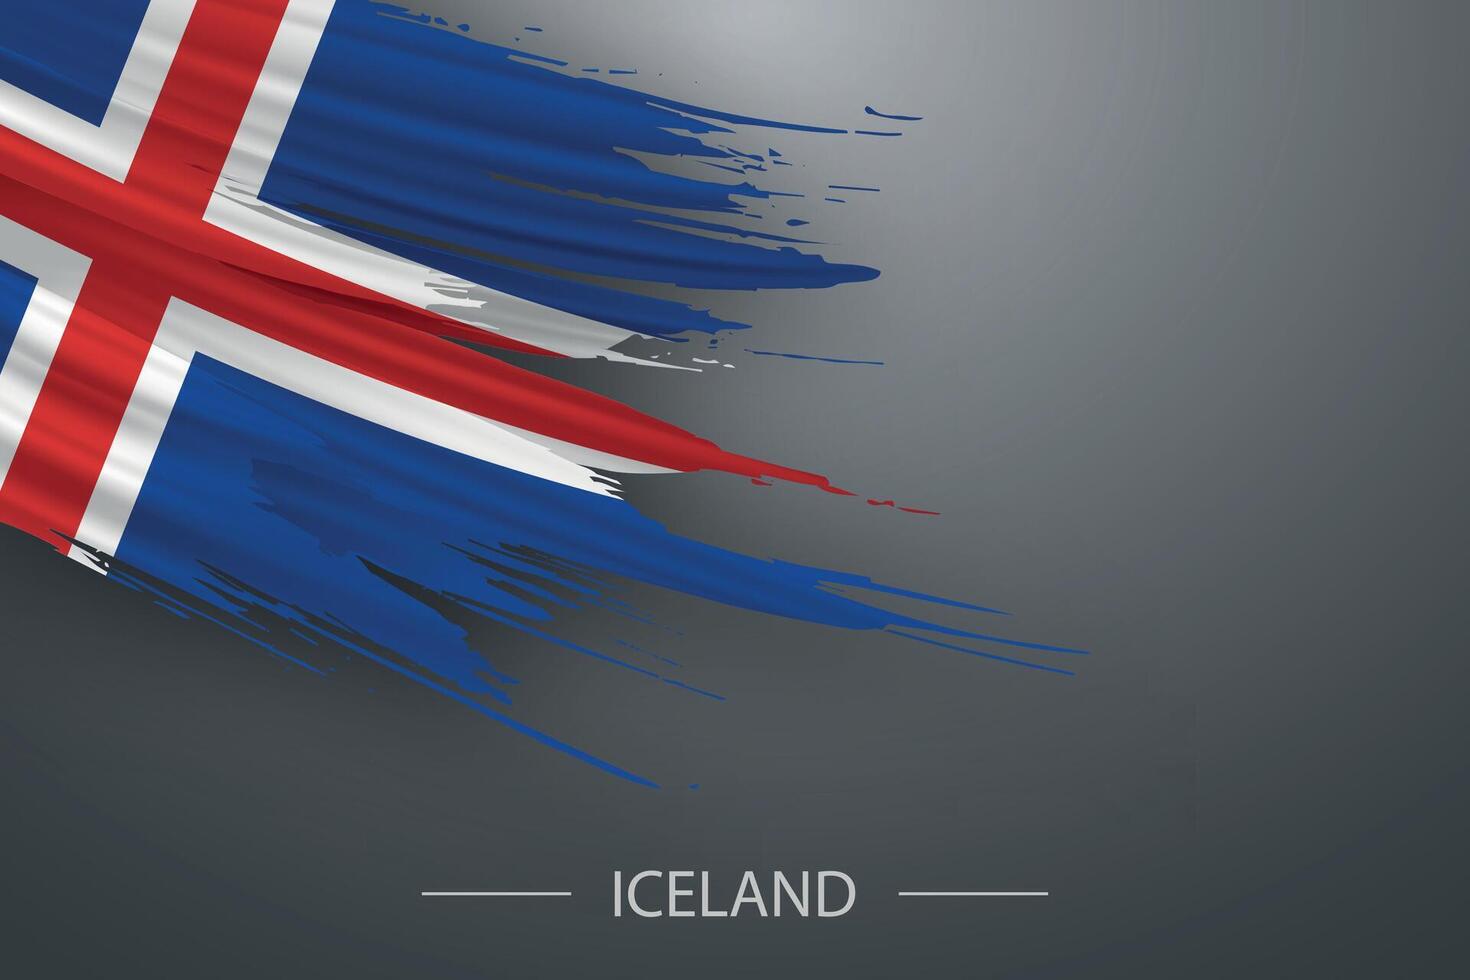 3d grunge escova acidente vascular encefálico bandeira do Islândia vetor